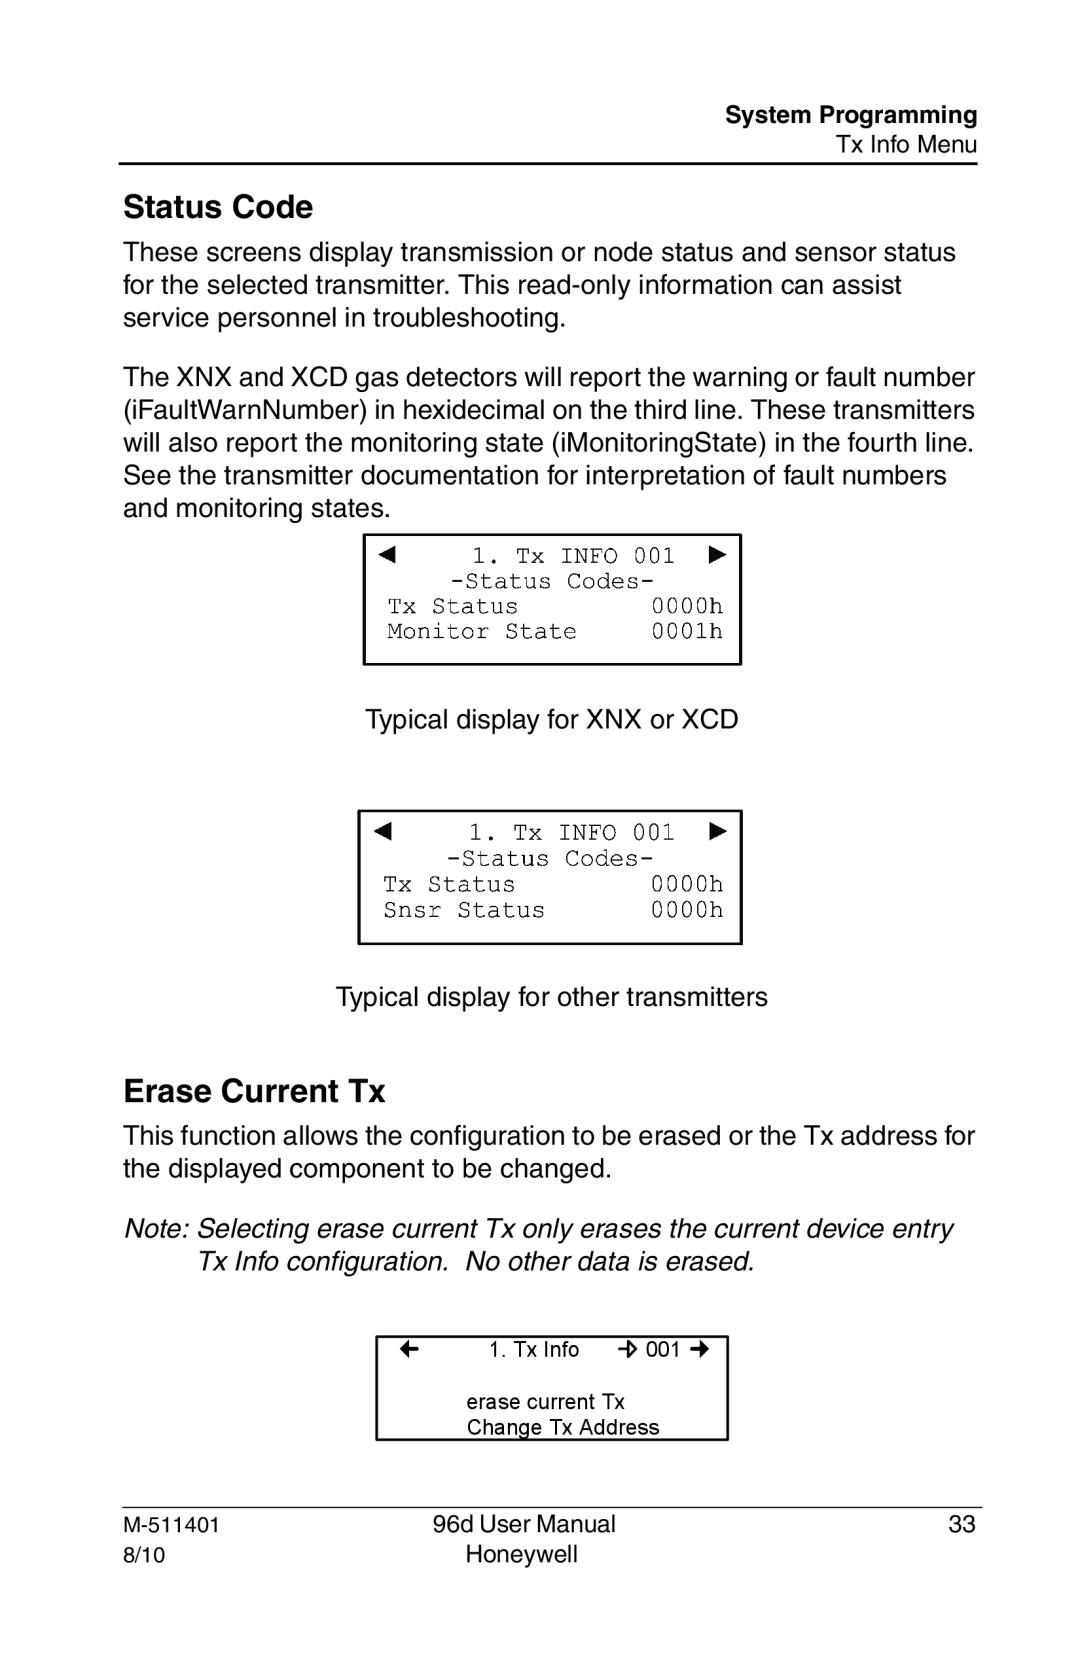 Honeywell 96D user manual Status Code, Erase Current Tx 